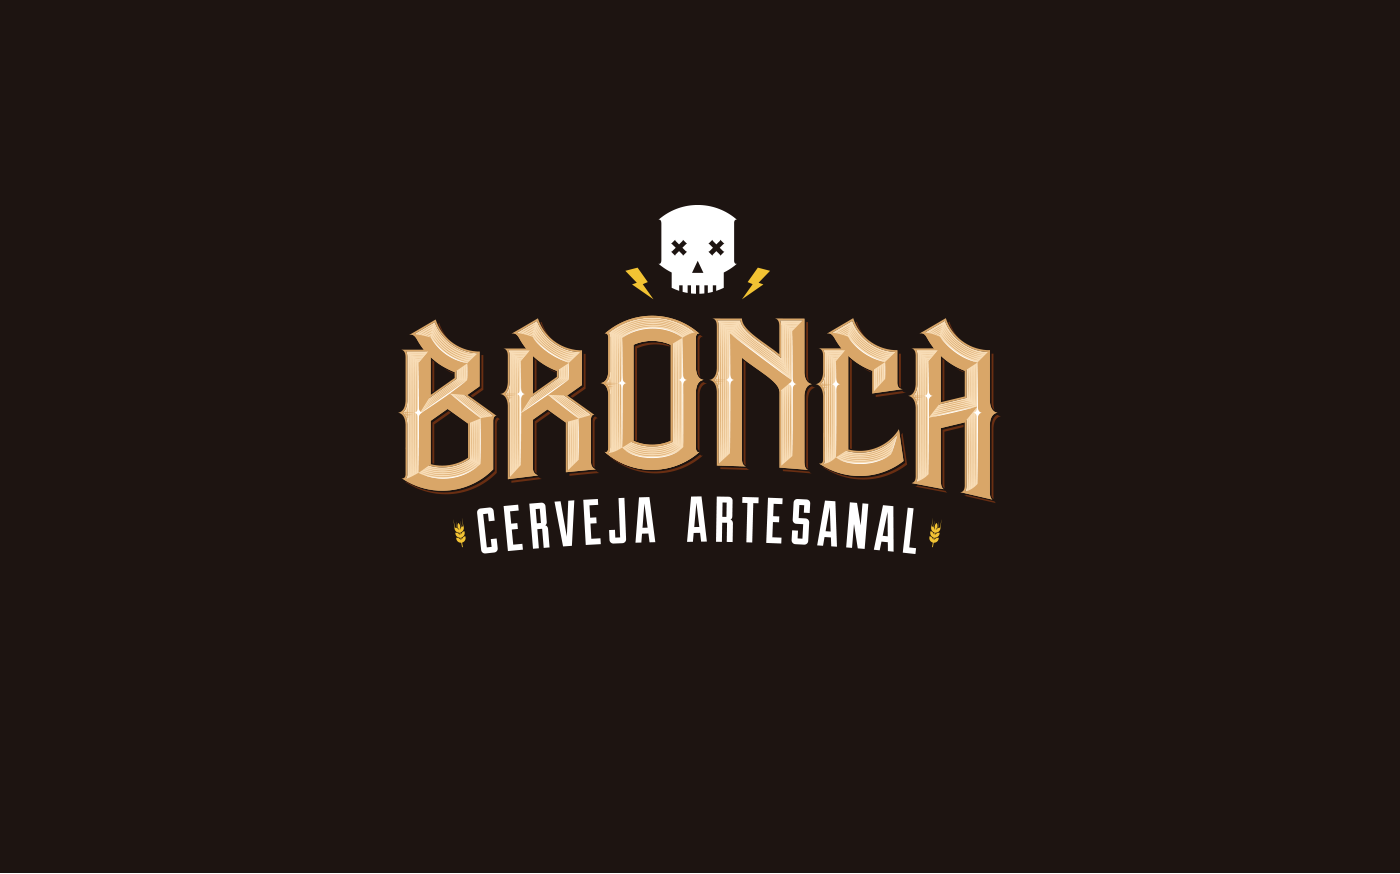 Bronca rótulo Cerveja artesanal são paulo branding  logo cervejaria growler beer